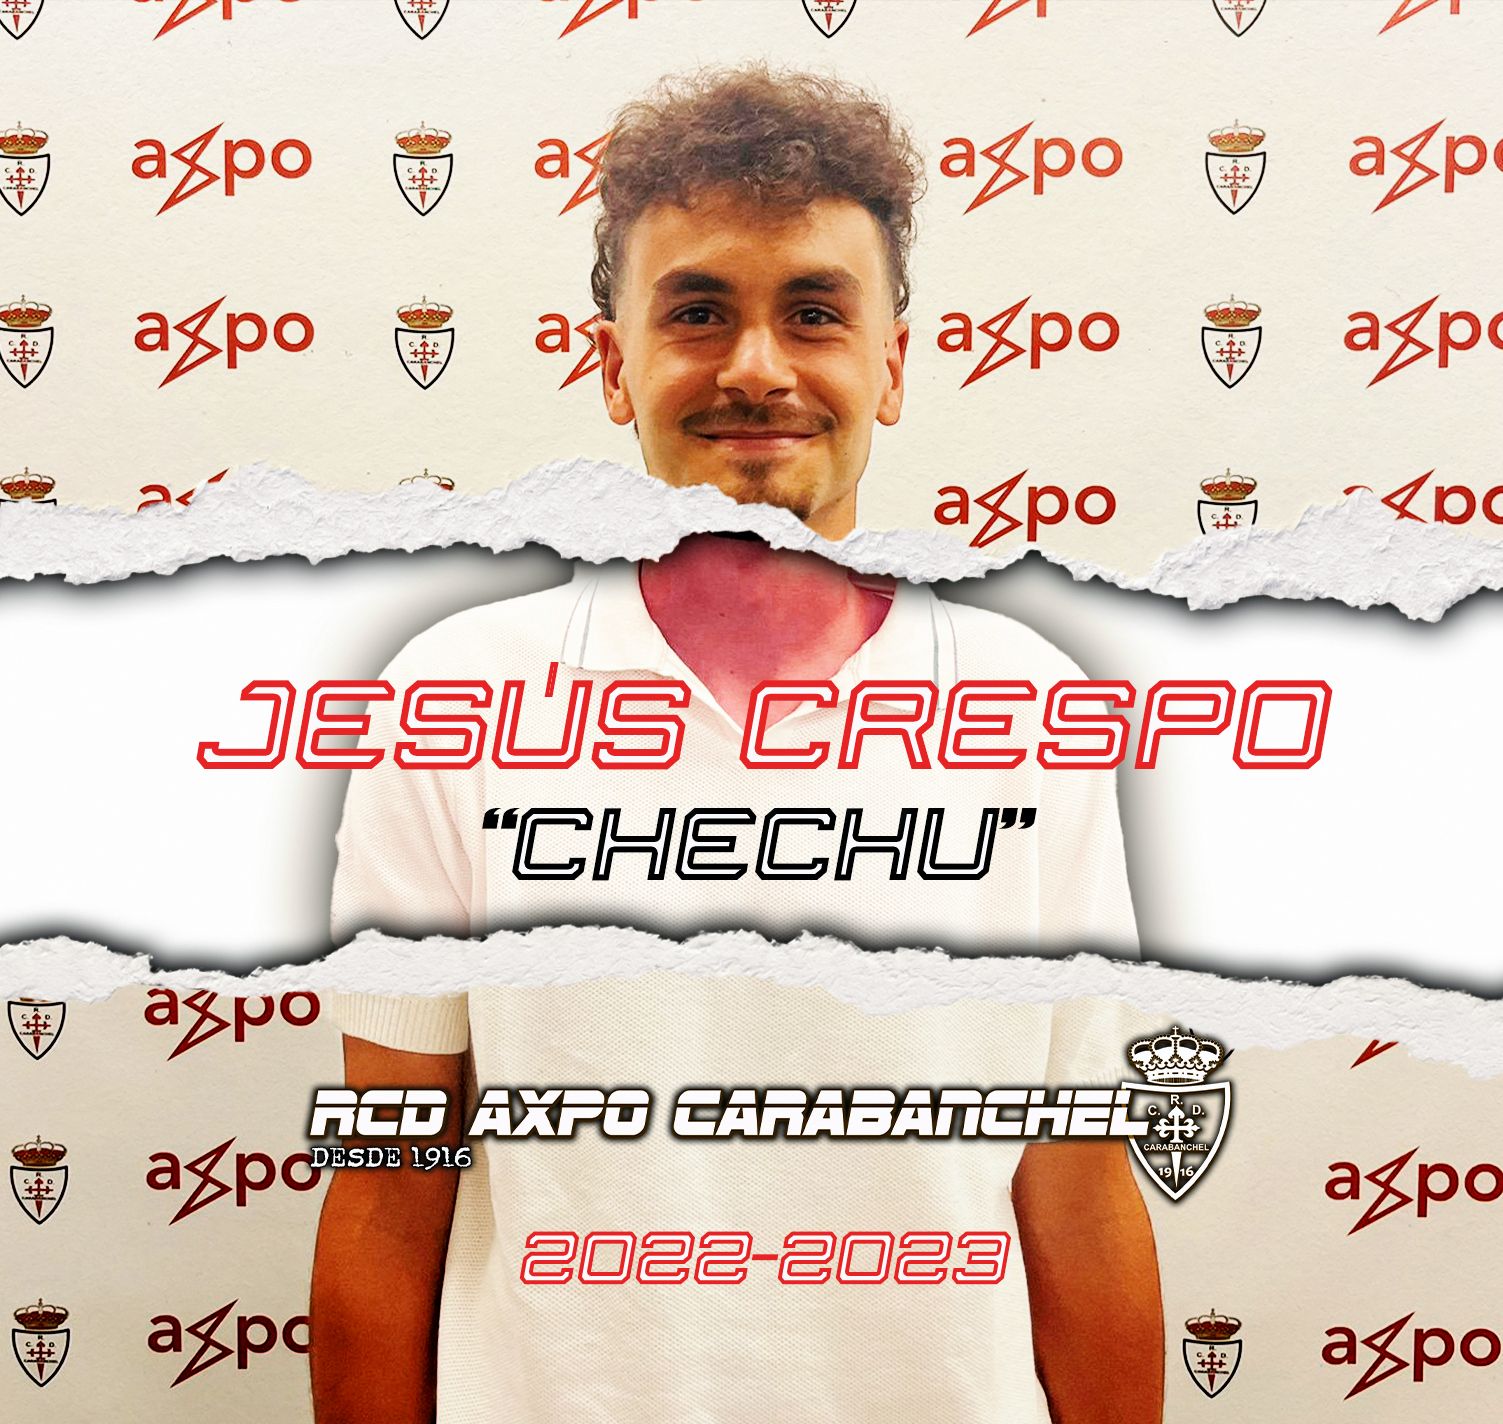 00000318 Jesus Crespo Chechu